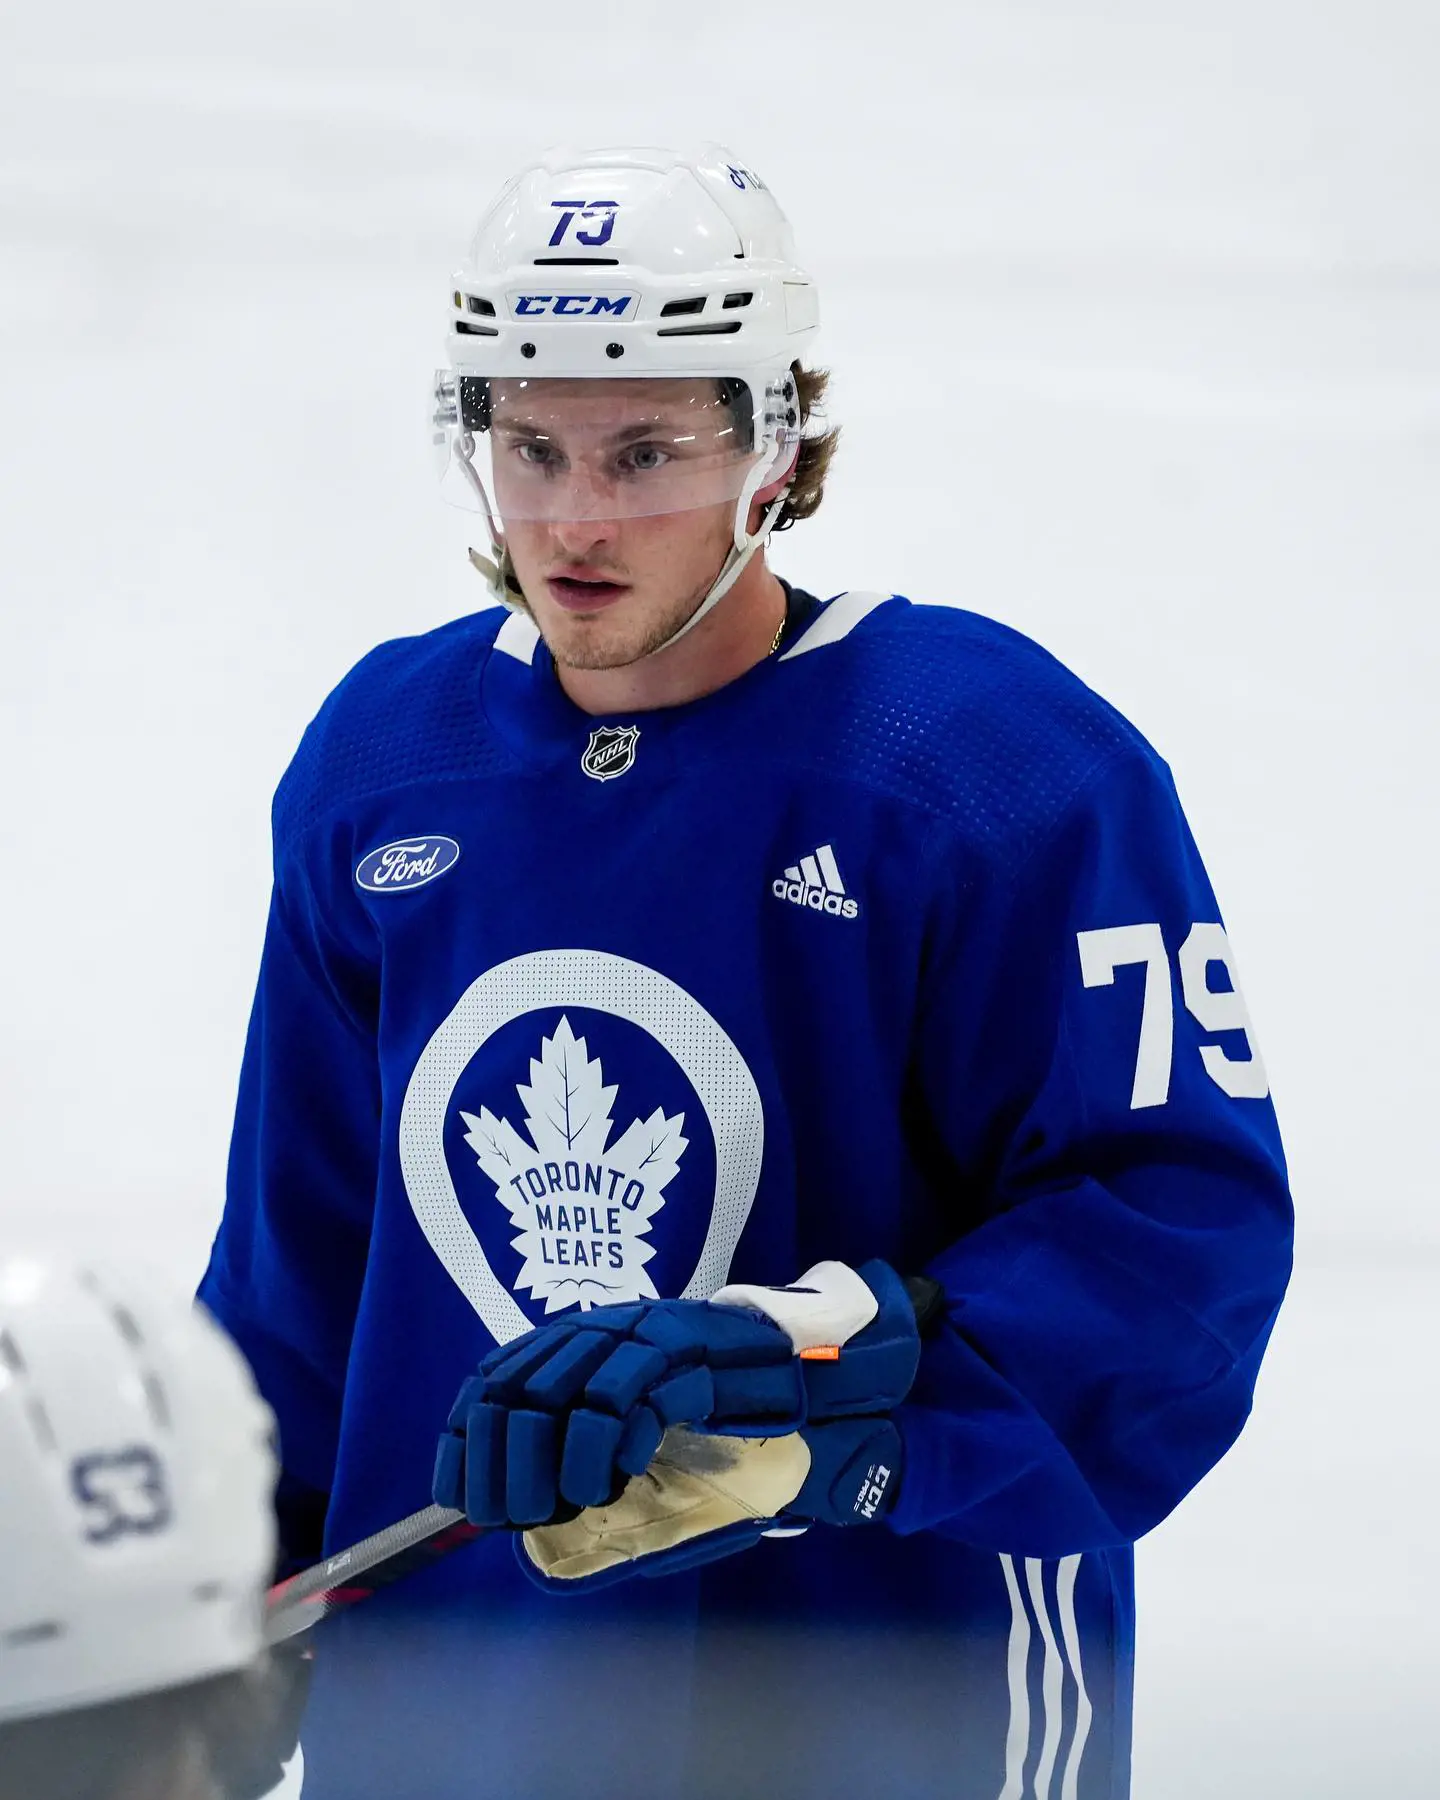 Nicholas Moldenhauer geared up in Toronto Maple Leaf's kit